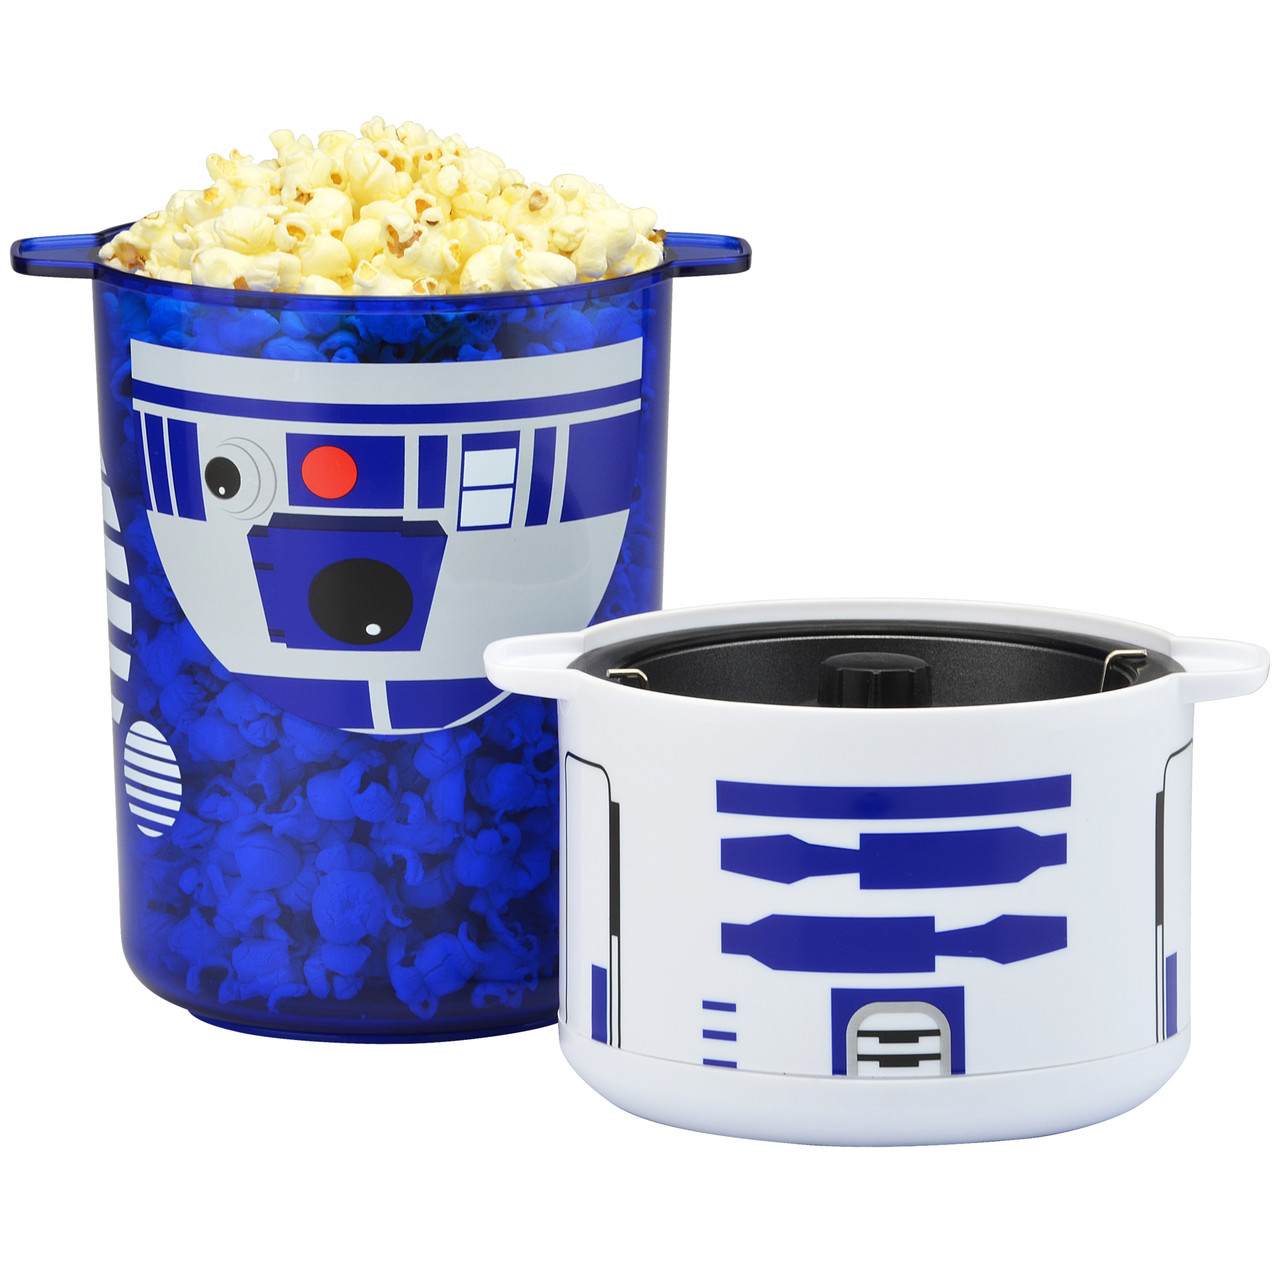 R2-D2 Stir Popcorn Popper